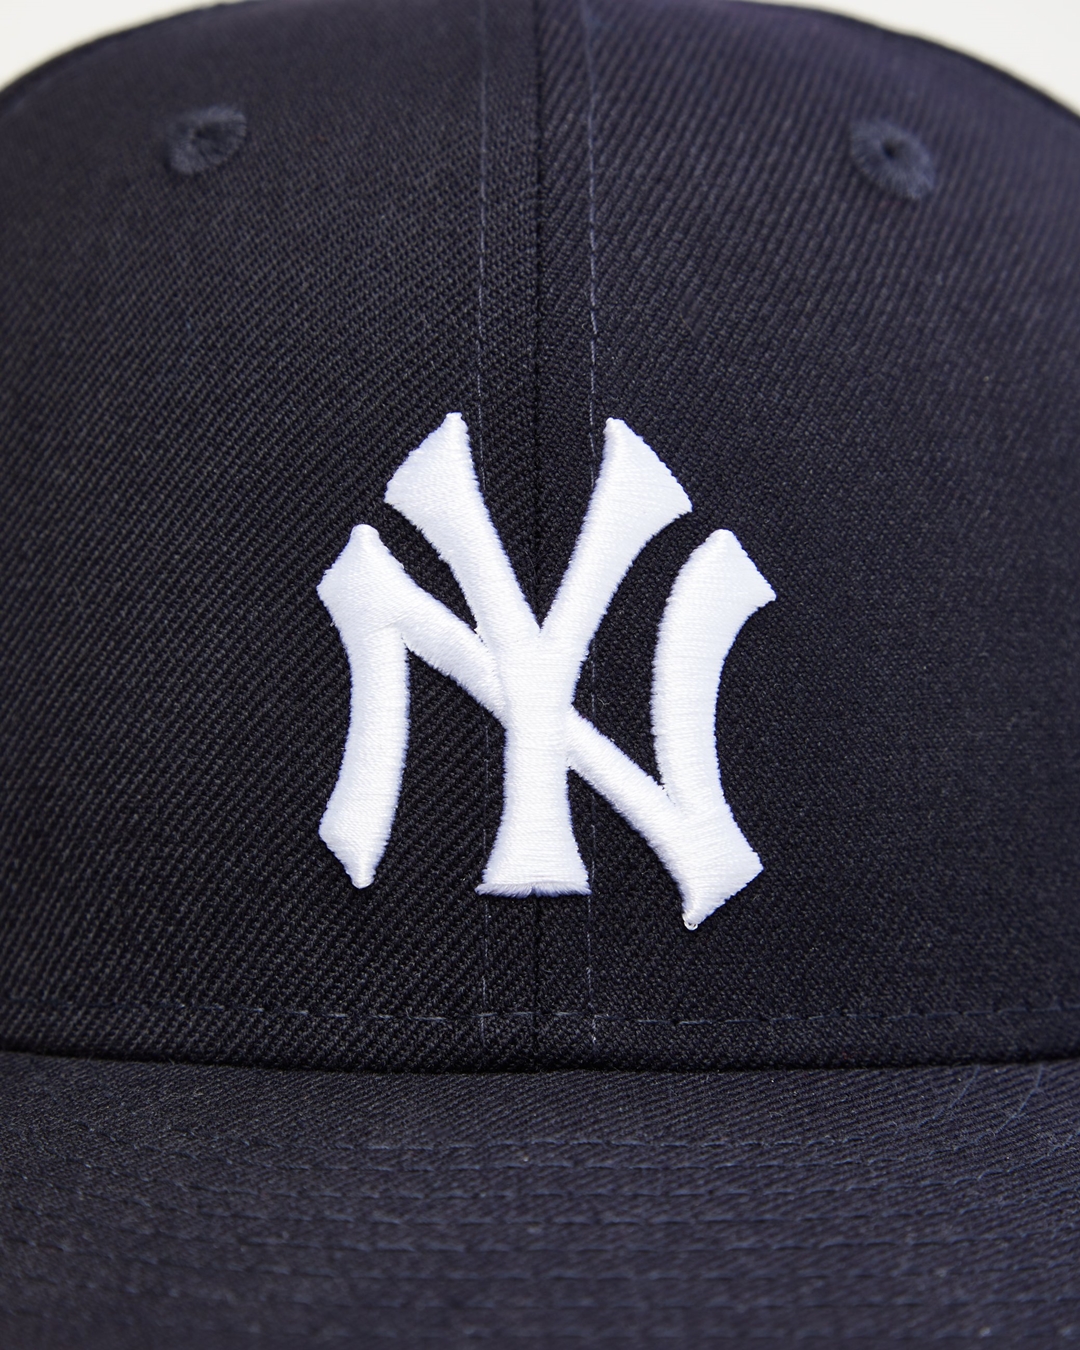 【Kith & New Era for New York Yankees -The Palette-】KITH MONDAY PROGRAM 2021年 第33弾が9/27 発売 (キス)